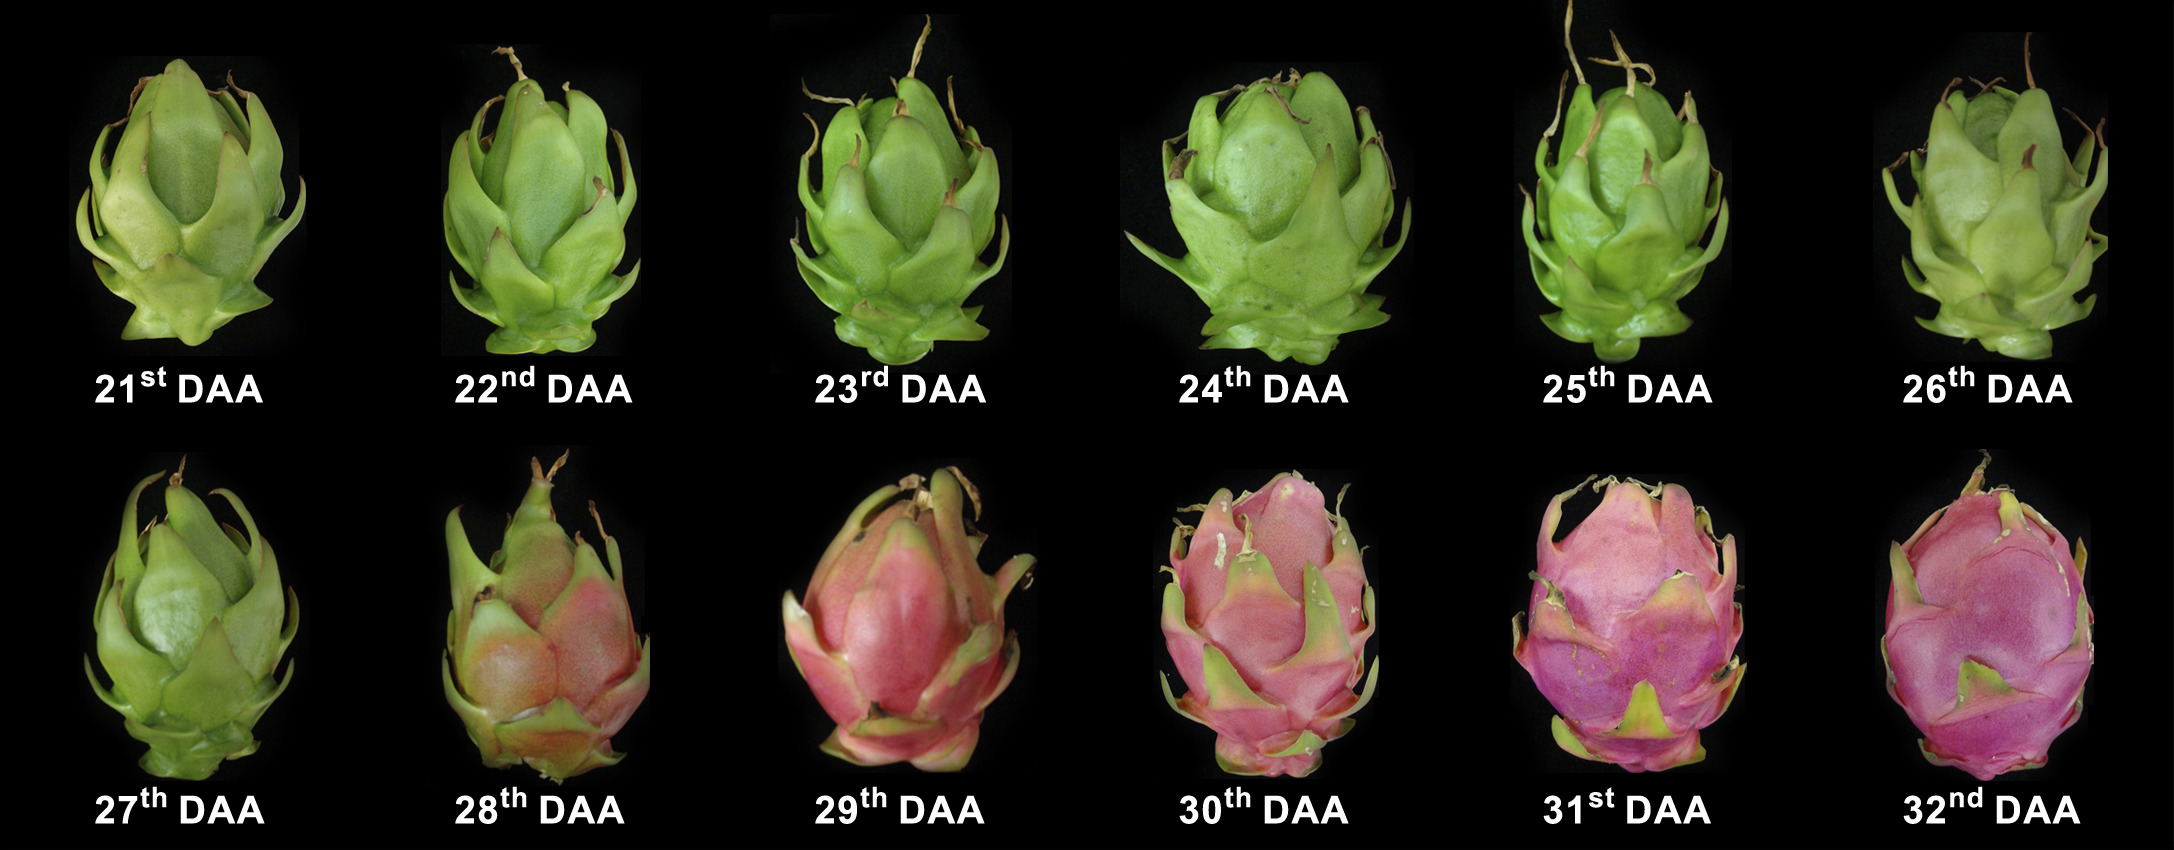 Physiological maturity of pitaya fruits Photo: T.A. Ortiz